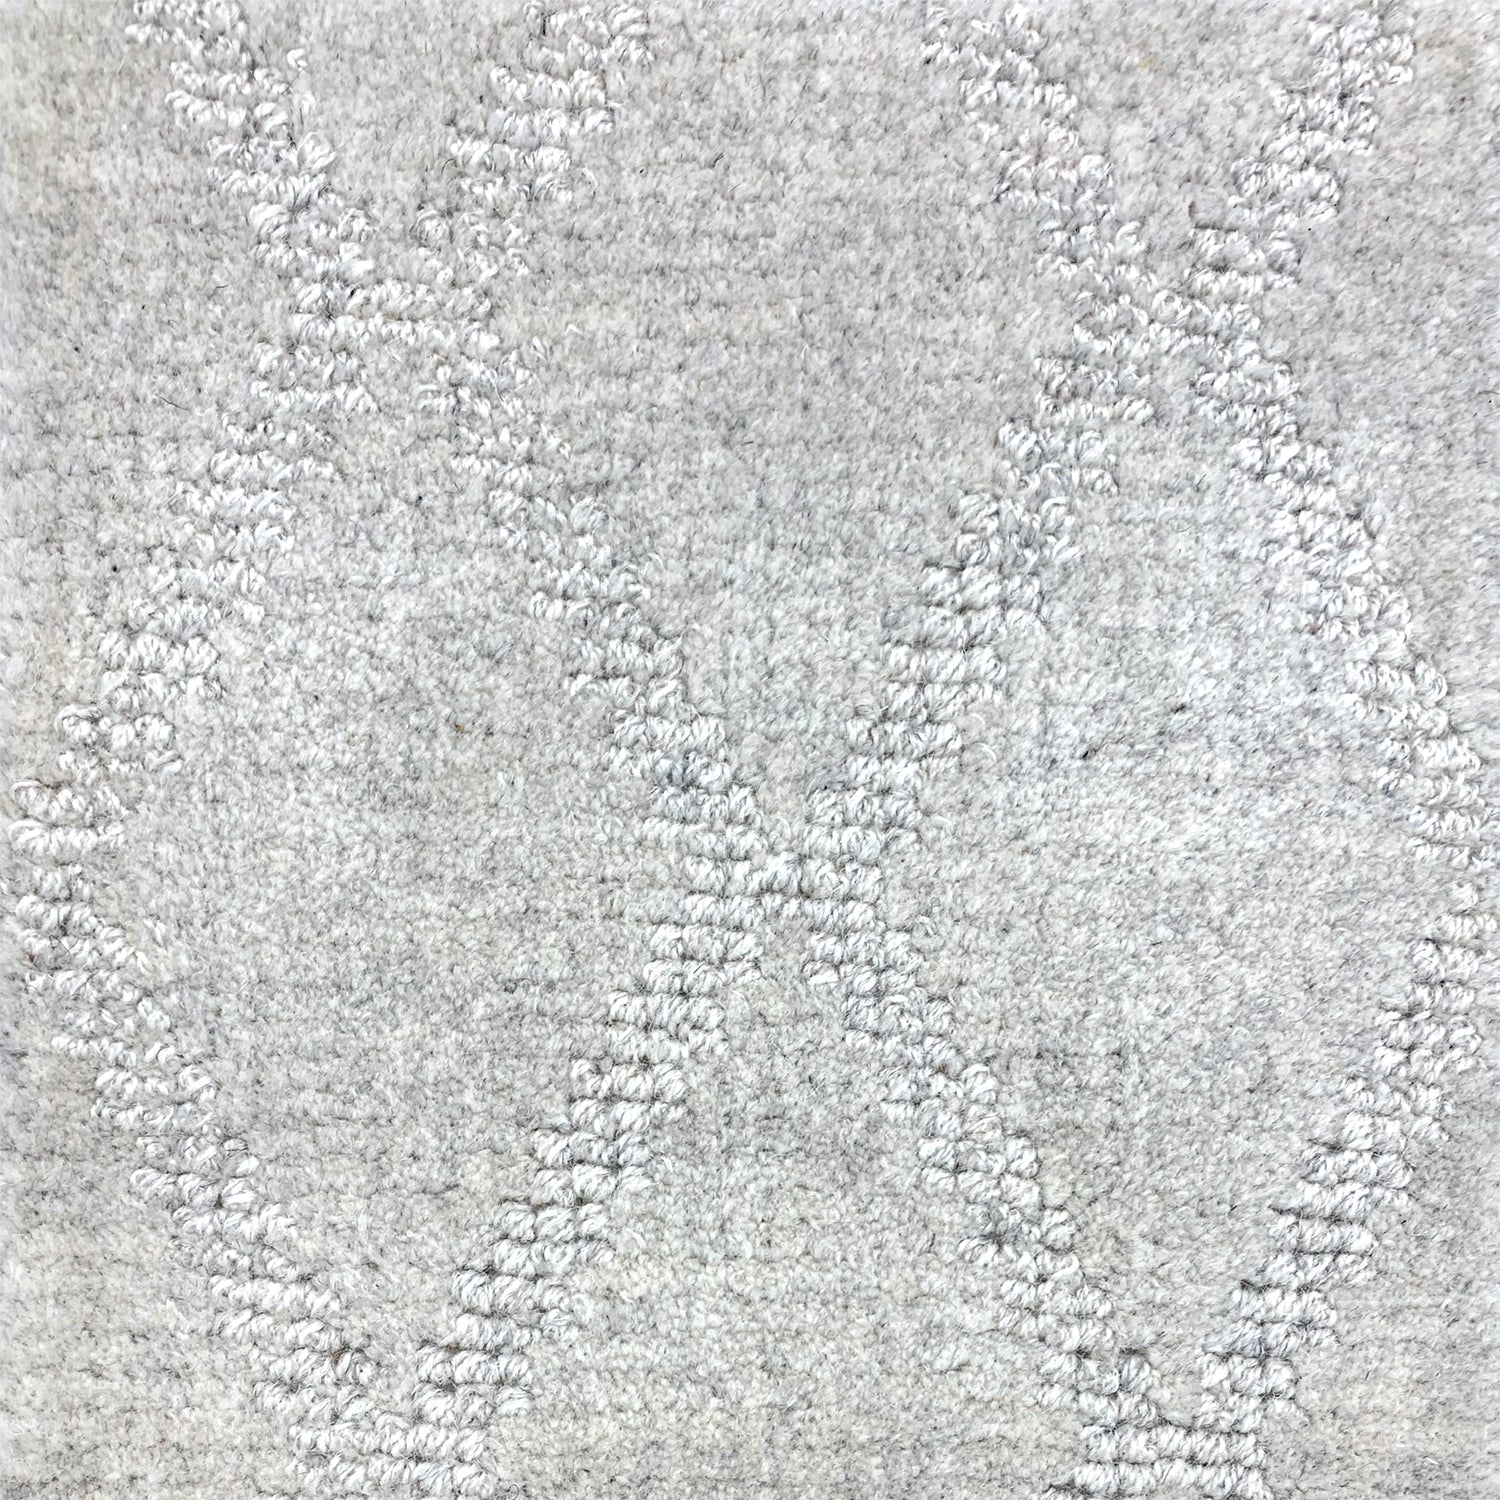 Wool-blend broadloom carpet swatch in a silver diamond lattice print.